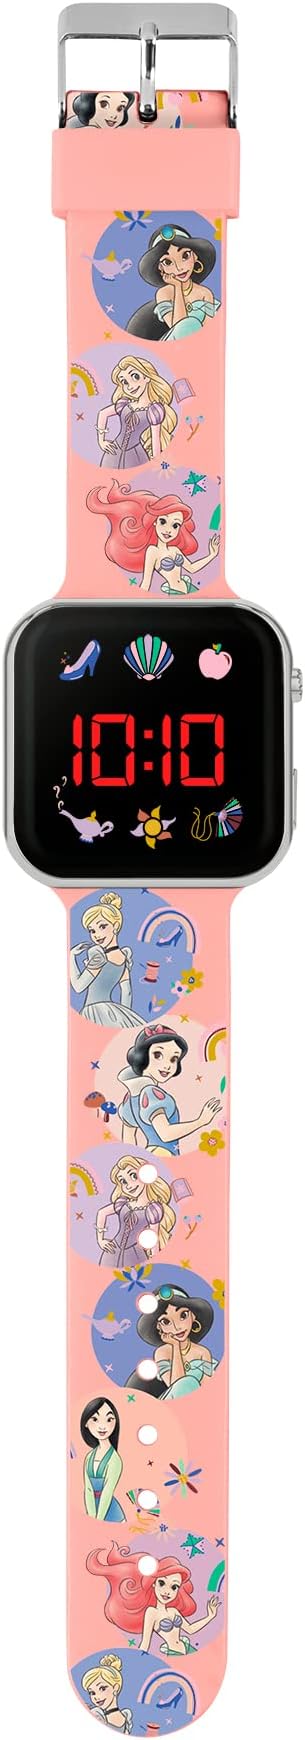 Peers Hardy - Disney Princess LED Digital Watch